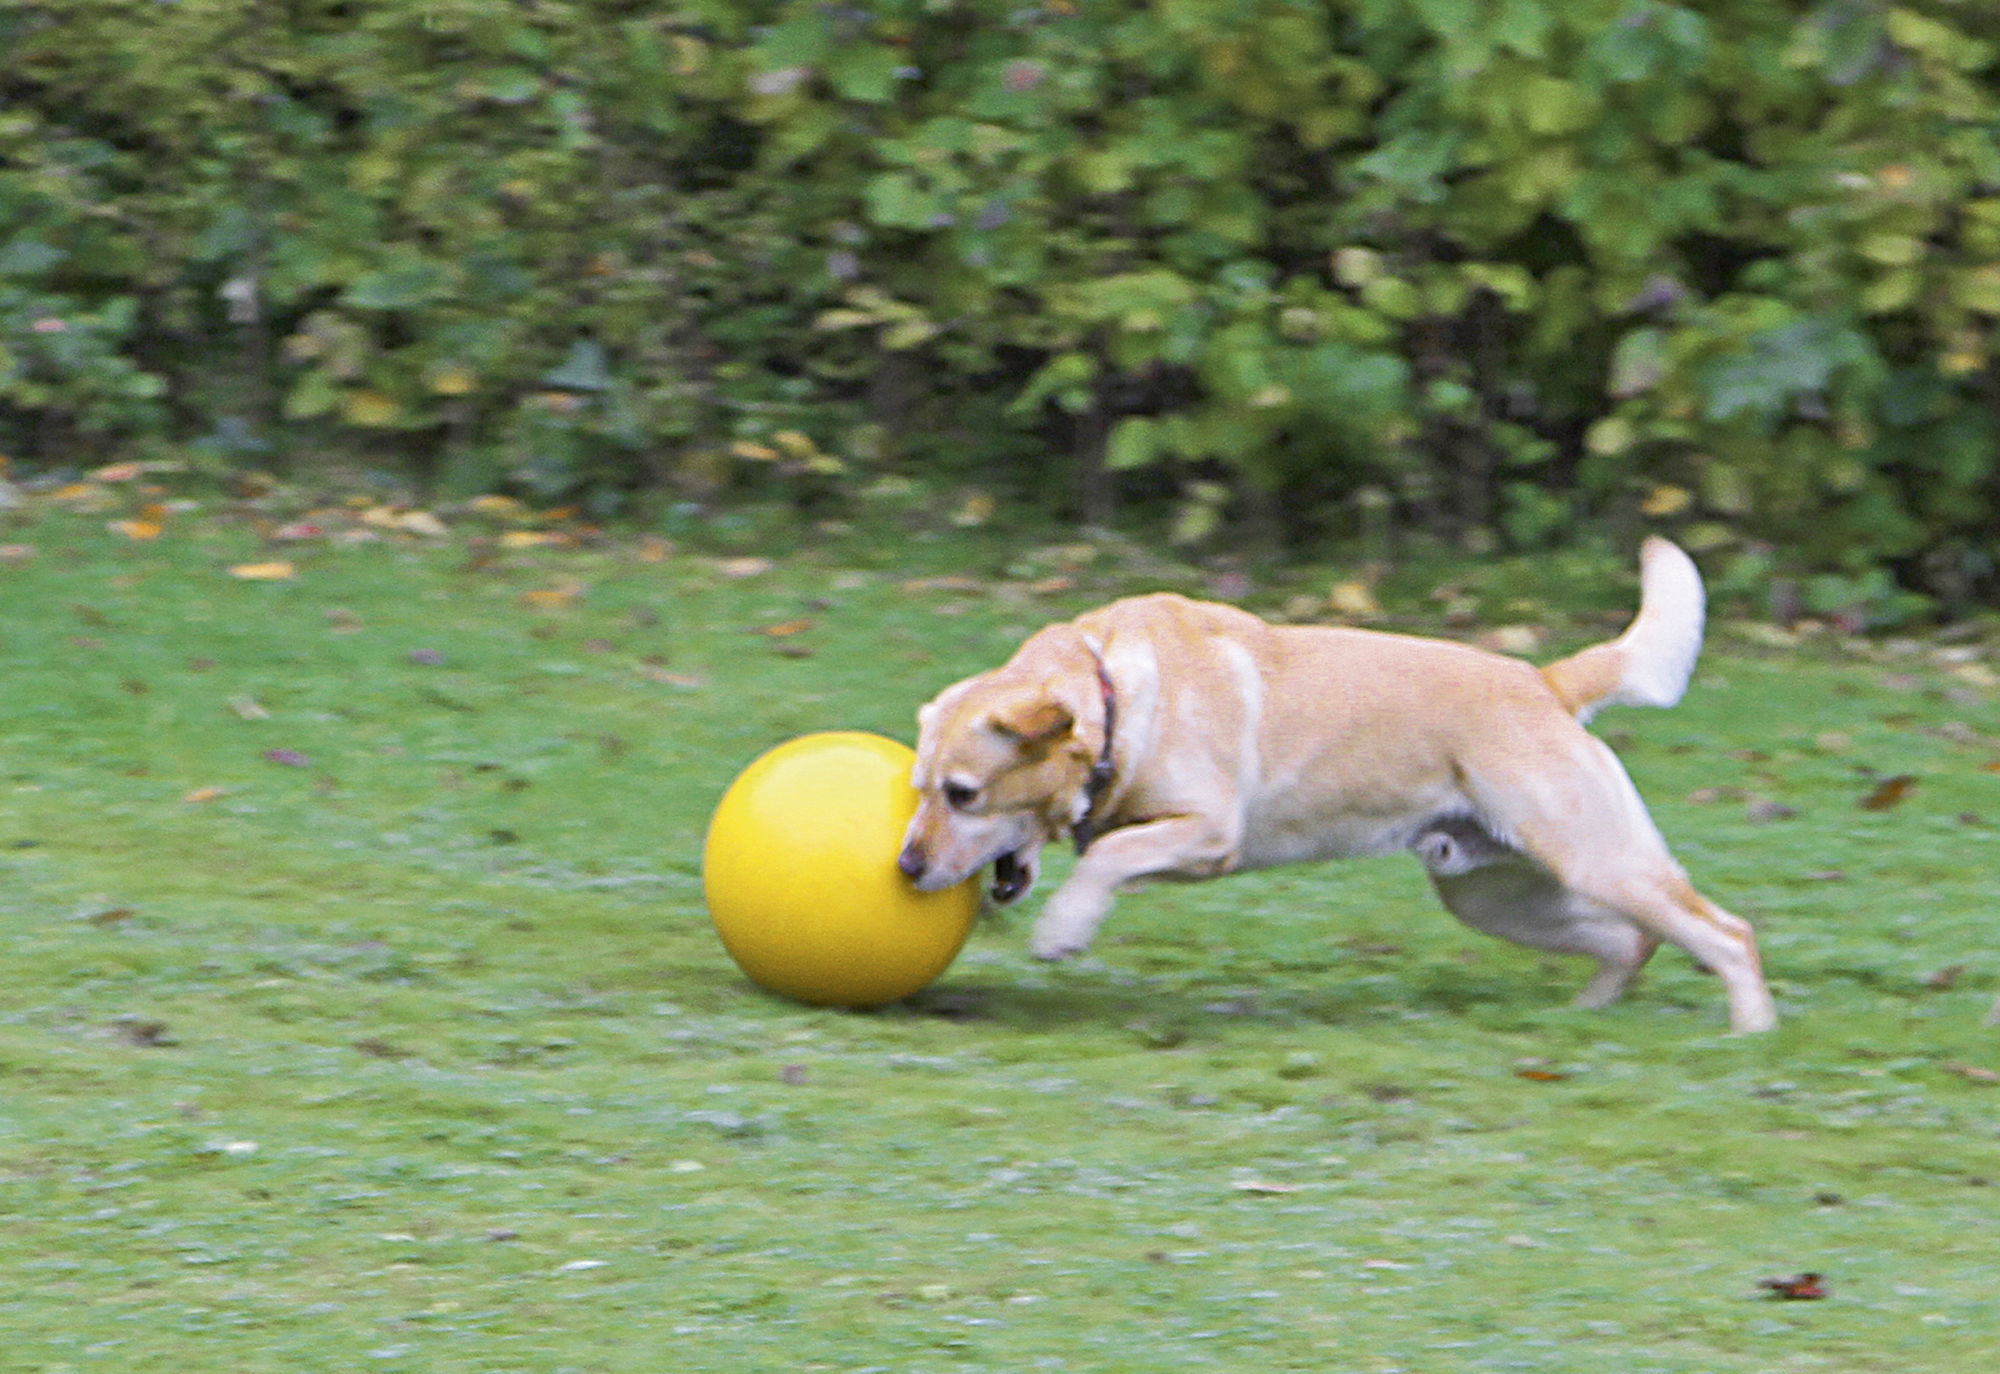 Hundespielball Ø 30 cm, gelb, aus Kunststoff